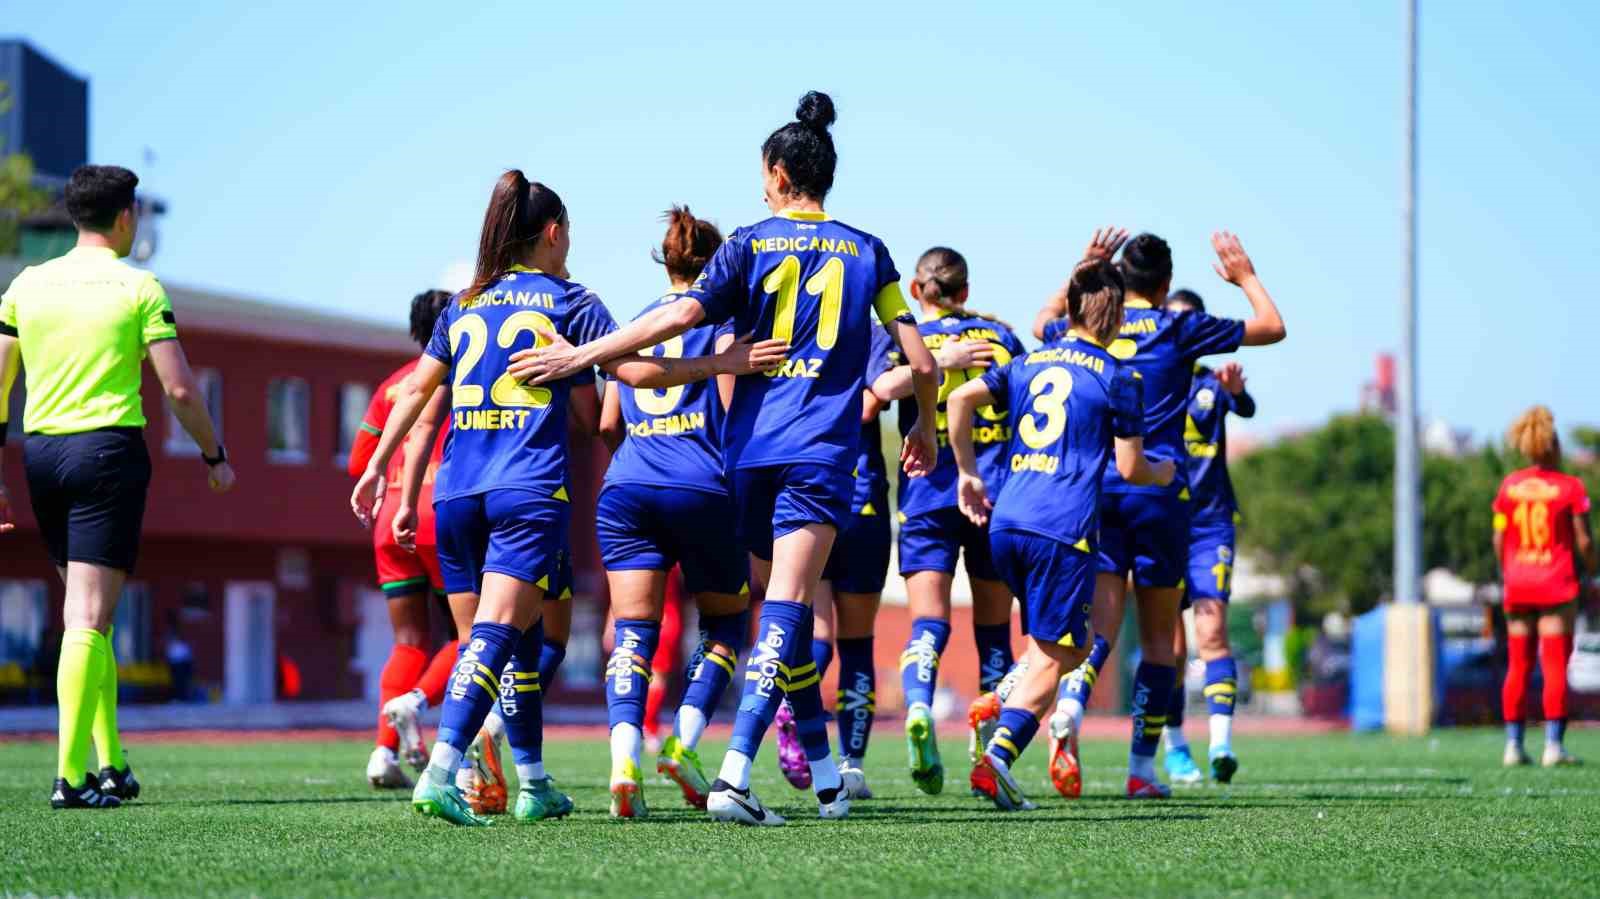 Turkcell Kadın Futbol Süper Ligi: Fenerbahçe: 5 – Amed Sportif Faaliyetler: 0